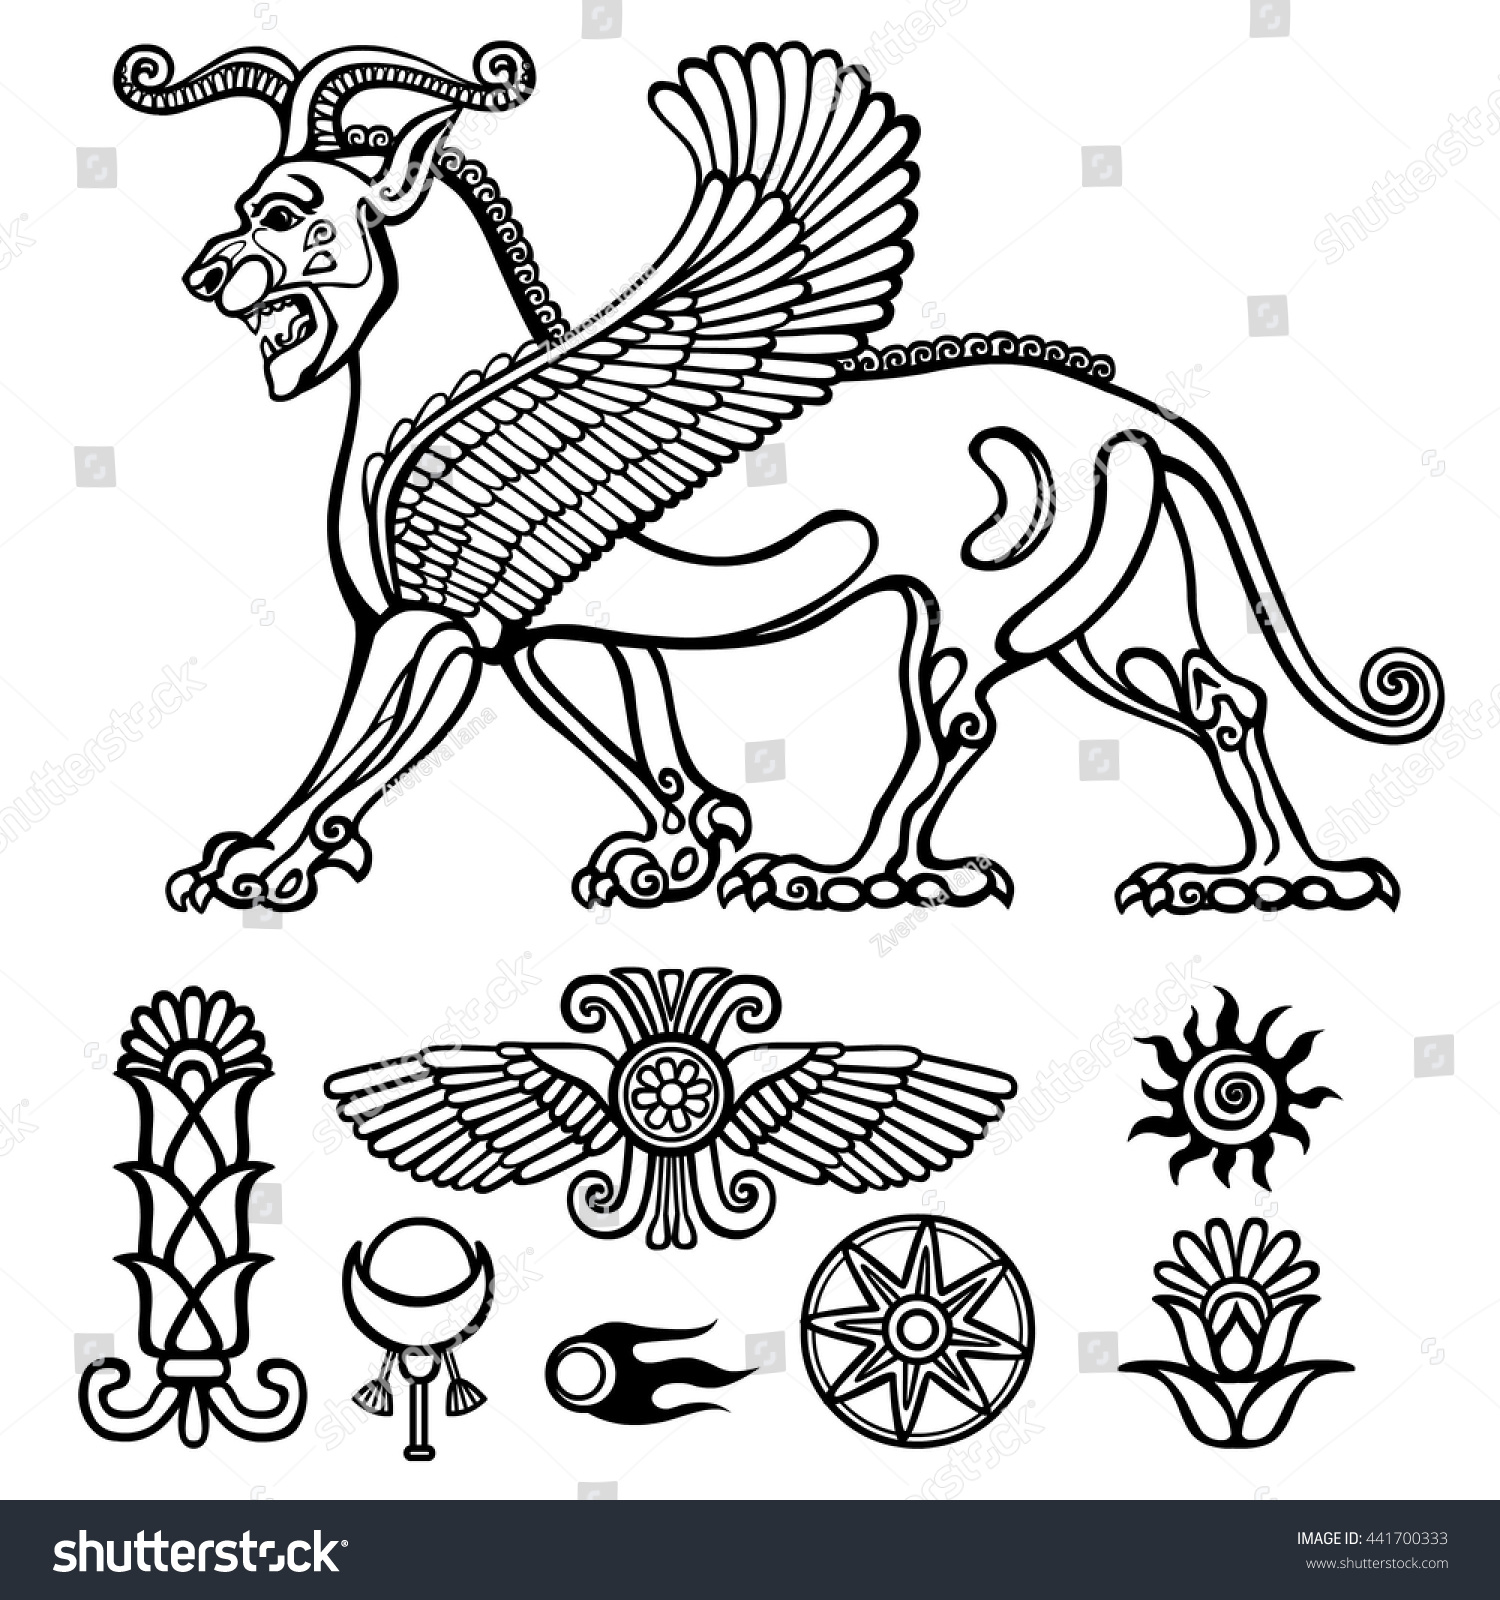 Image Assyrian Winged Animal Horned Lion: стоковая векторная графика (без л...